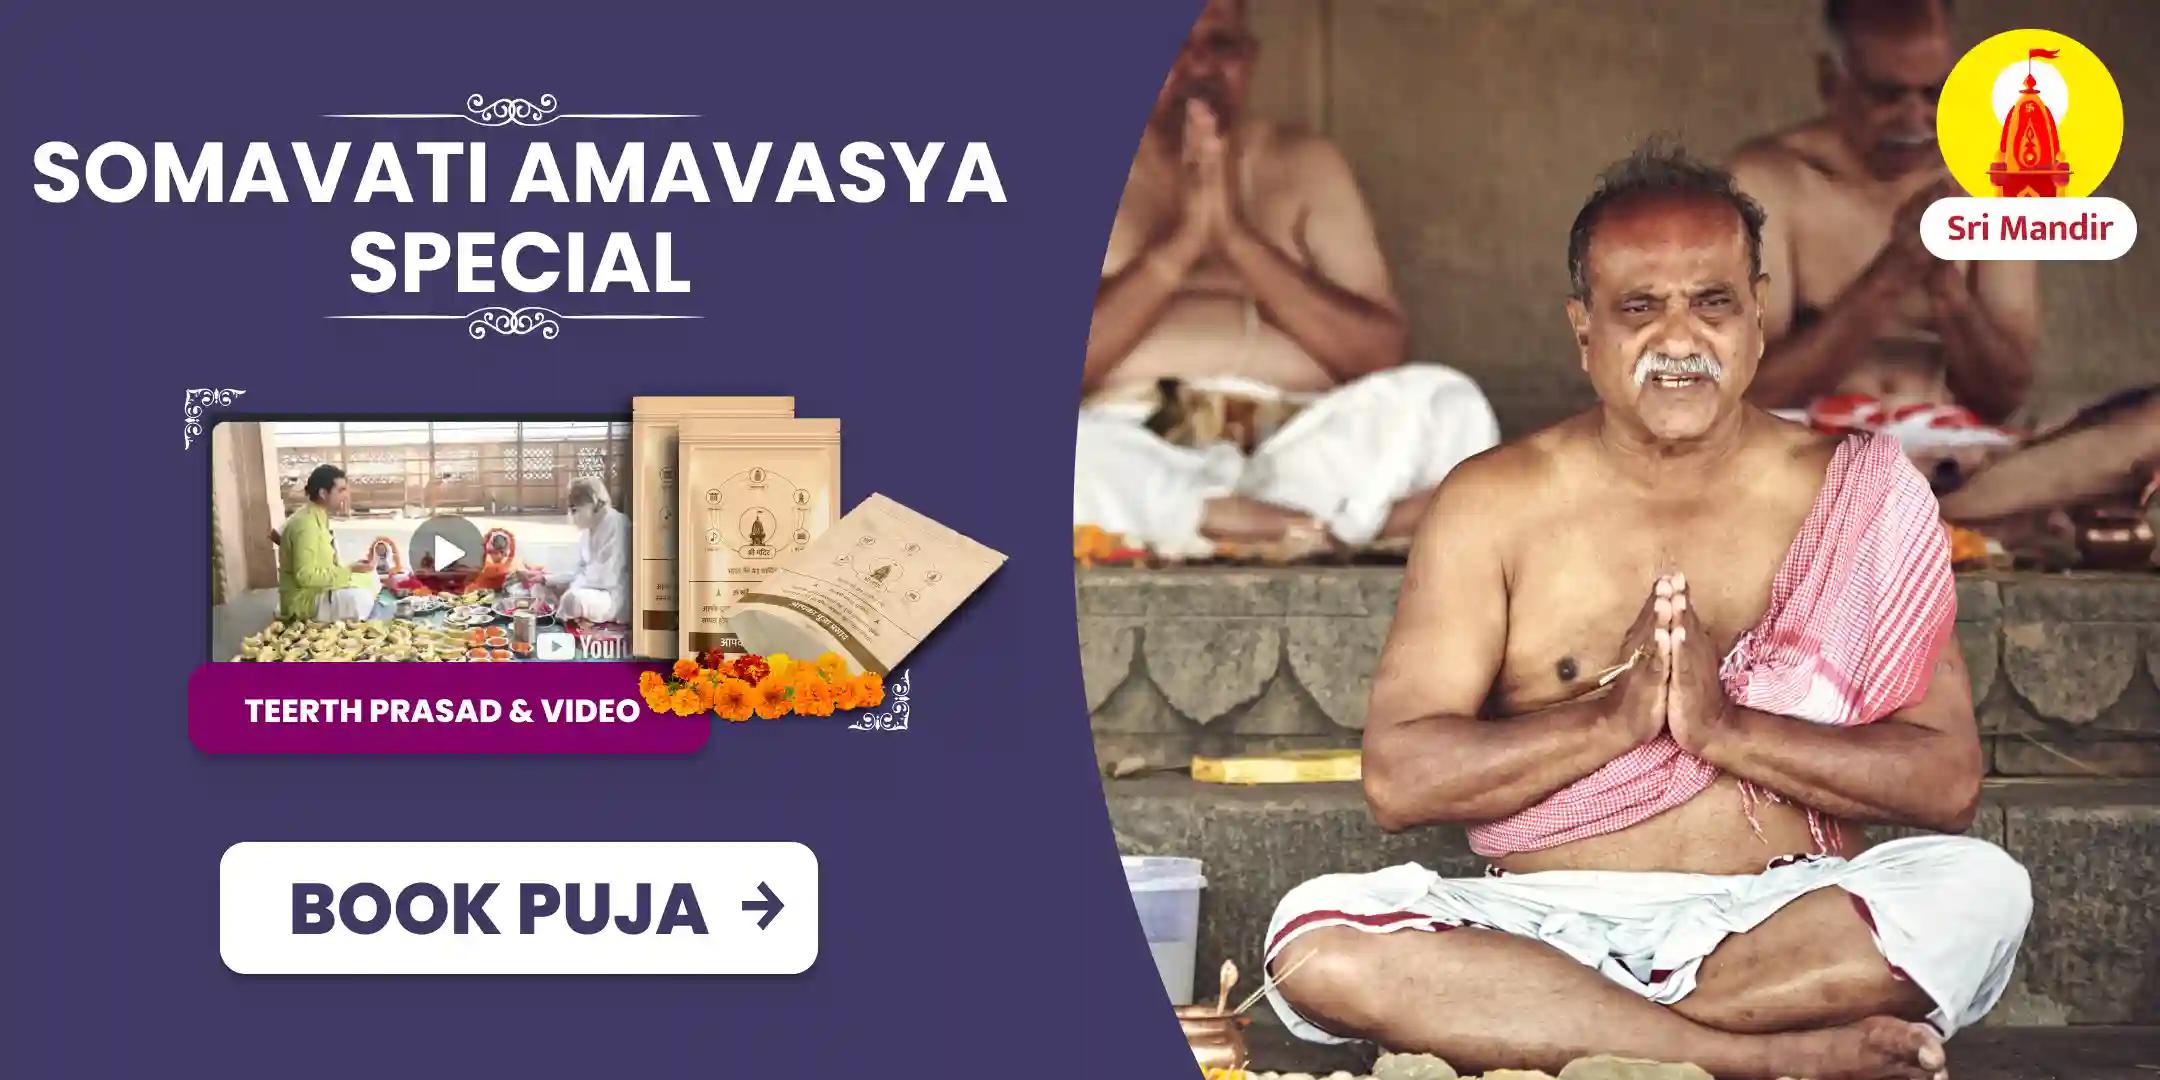 Somavati Amavasya Special Narayan Bali, Naag Bali, and Pitru Shanti Mahapuja For Relief from Ancestral Curses